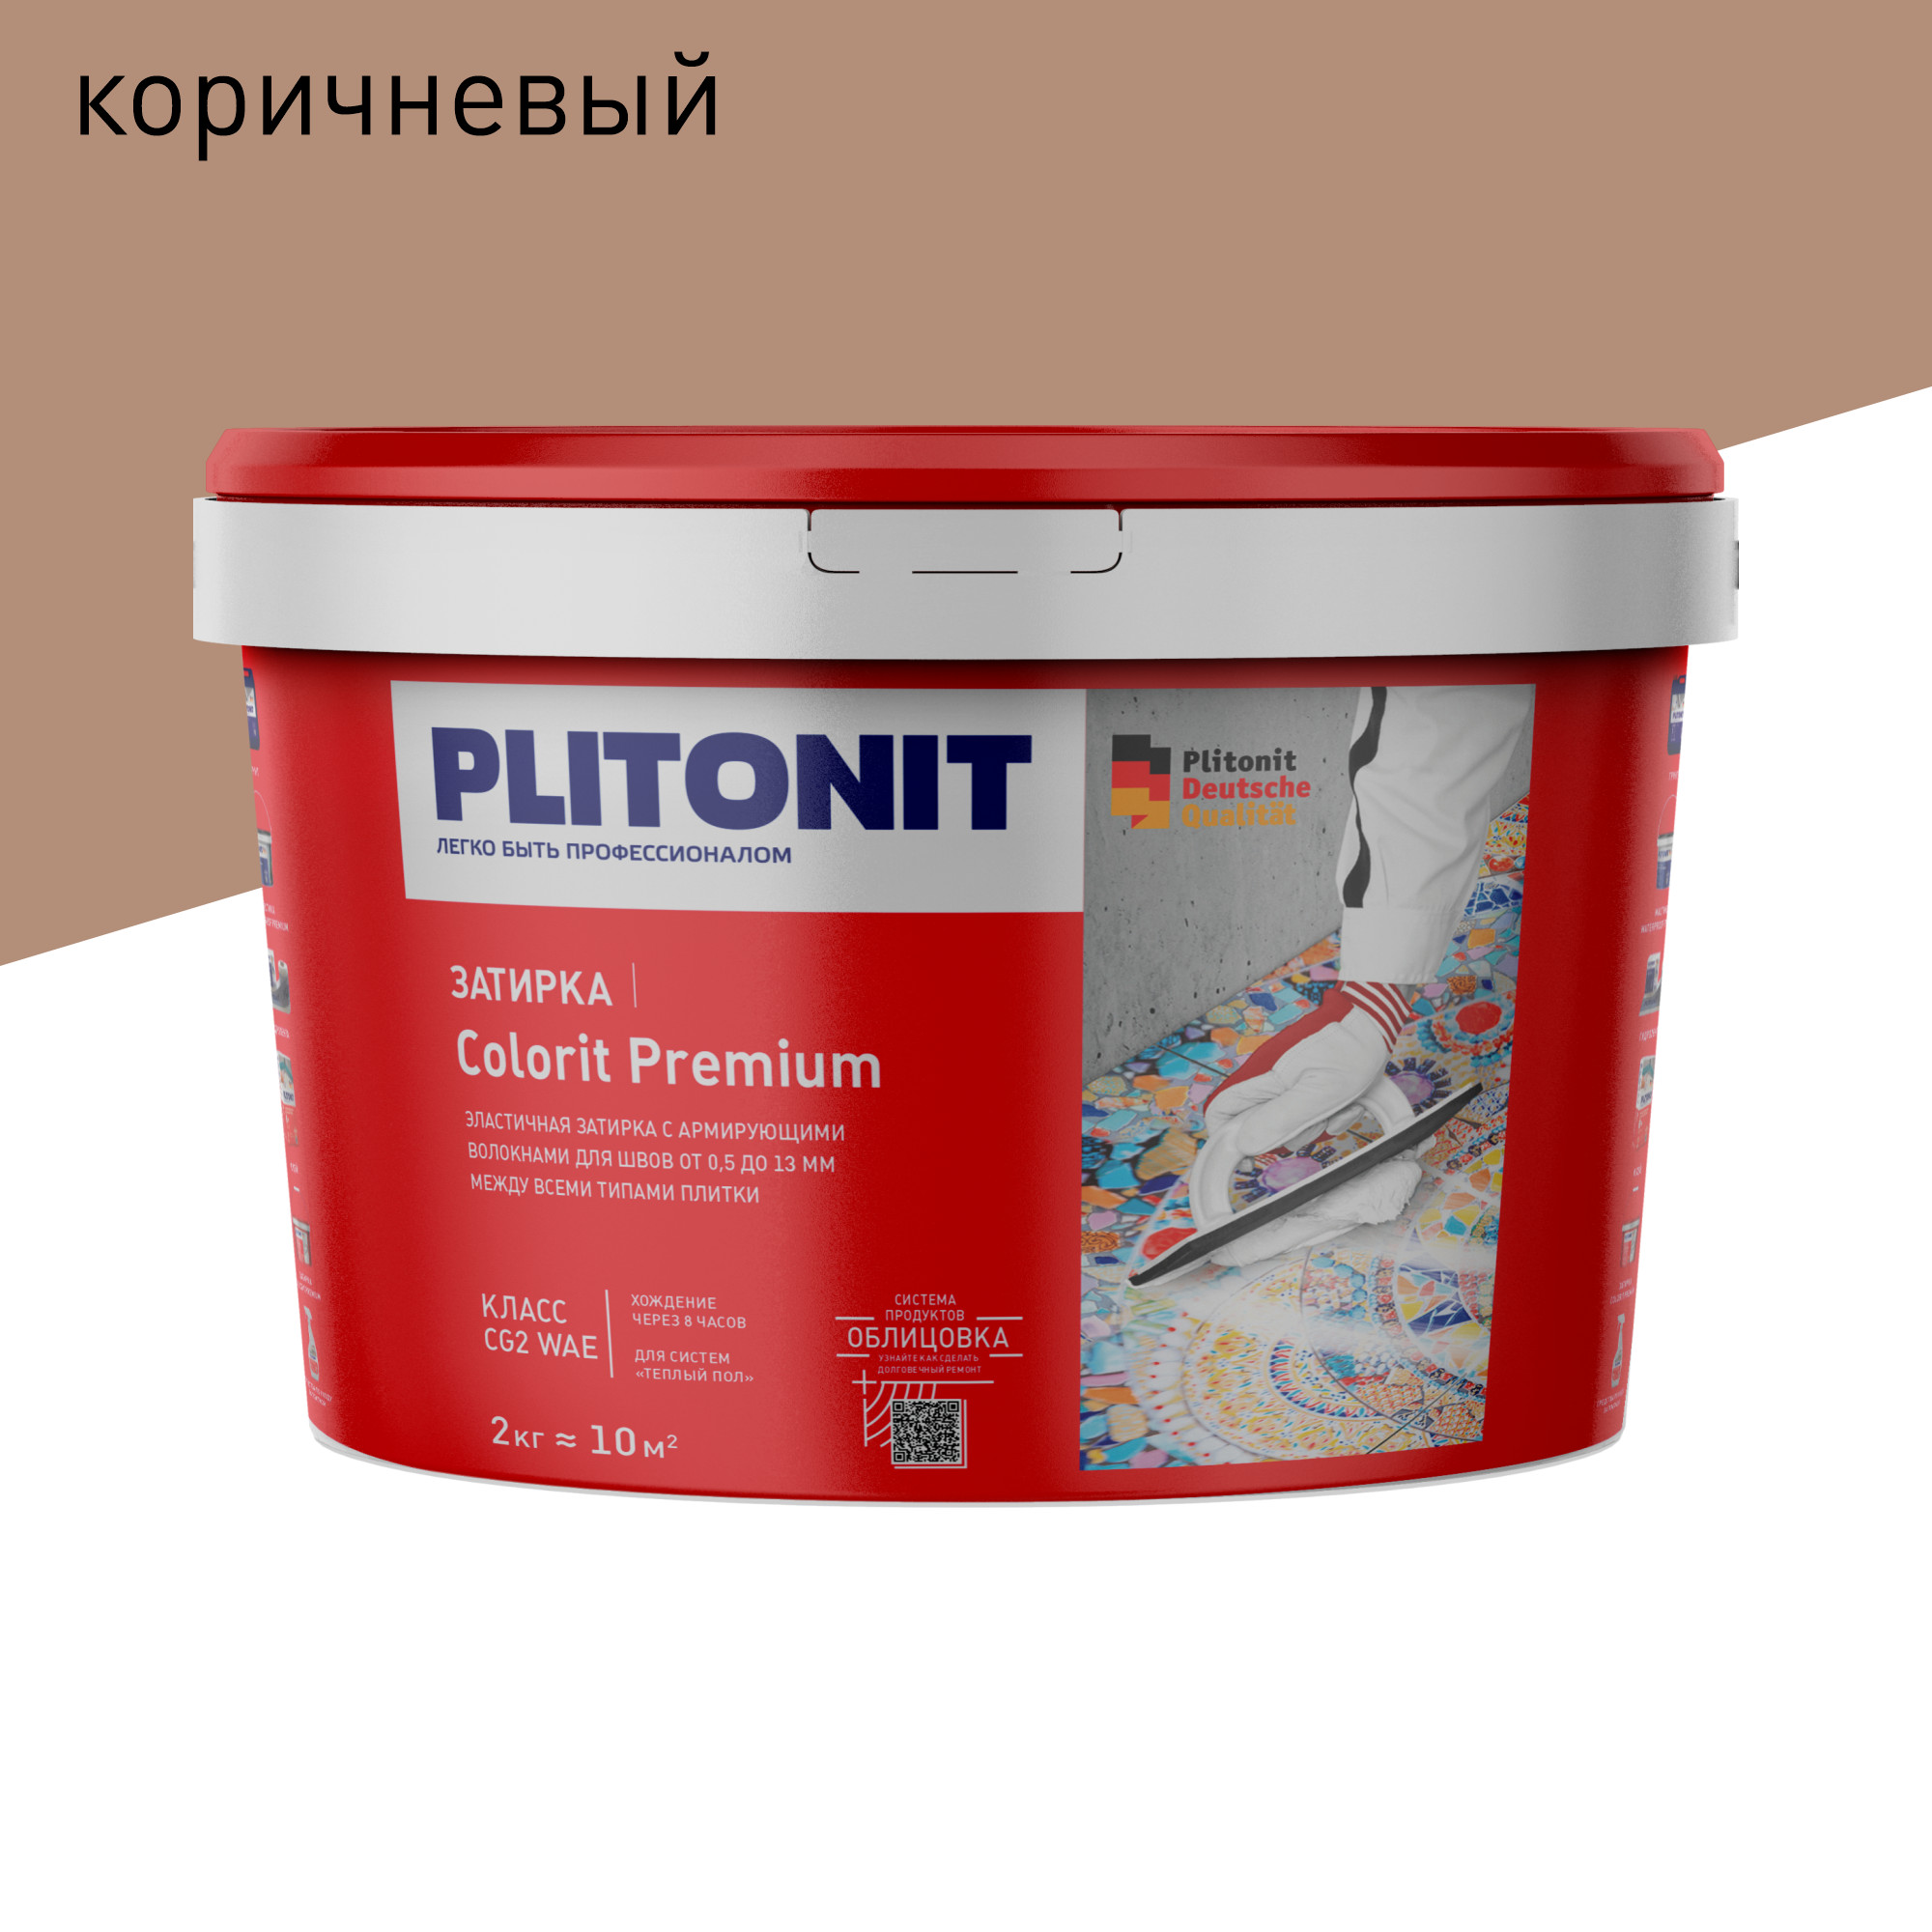 Затирка PLITONIT Colorit Premium коричневая 2 кг